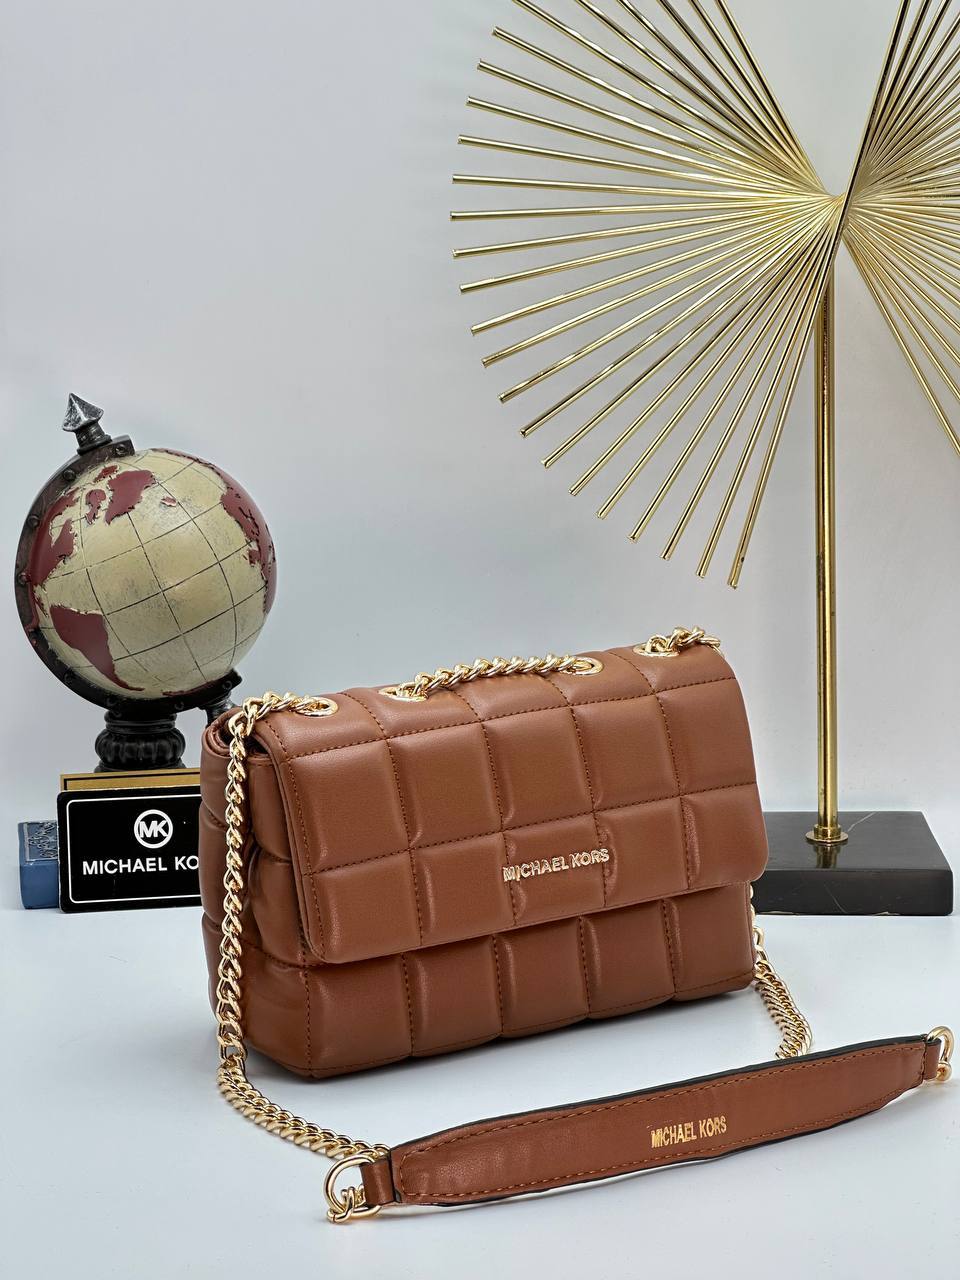 Elegance Unleashed: Women's Luxury Handbag Collection